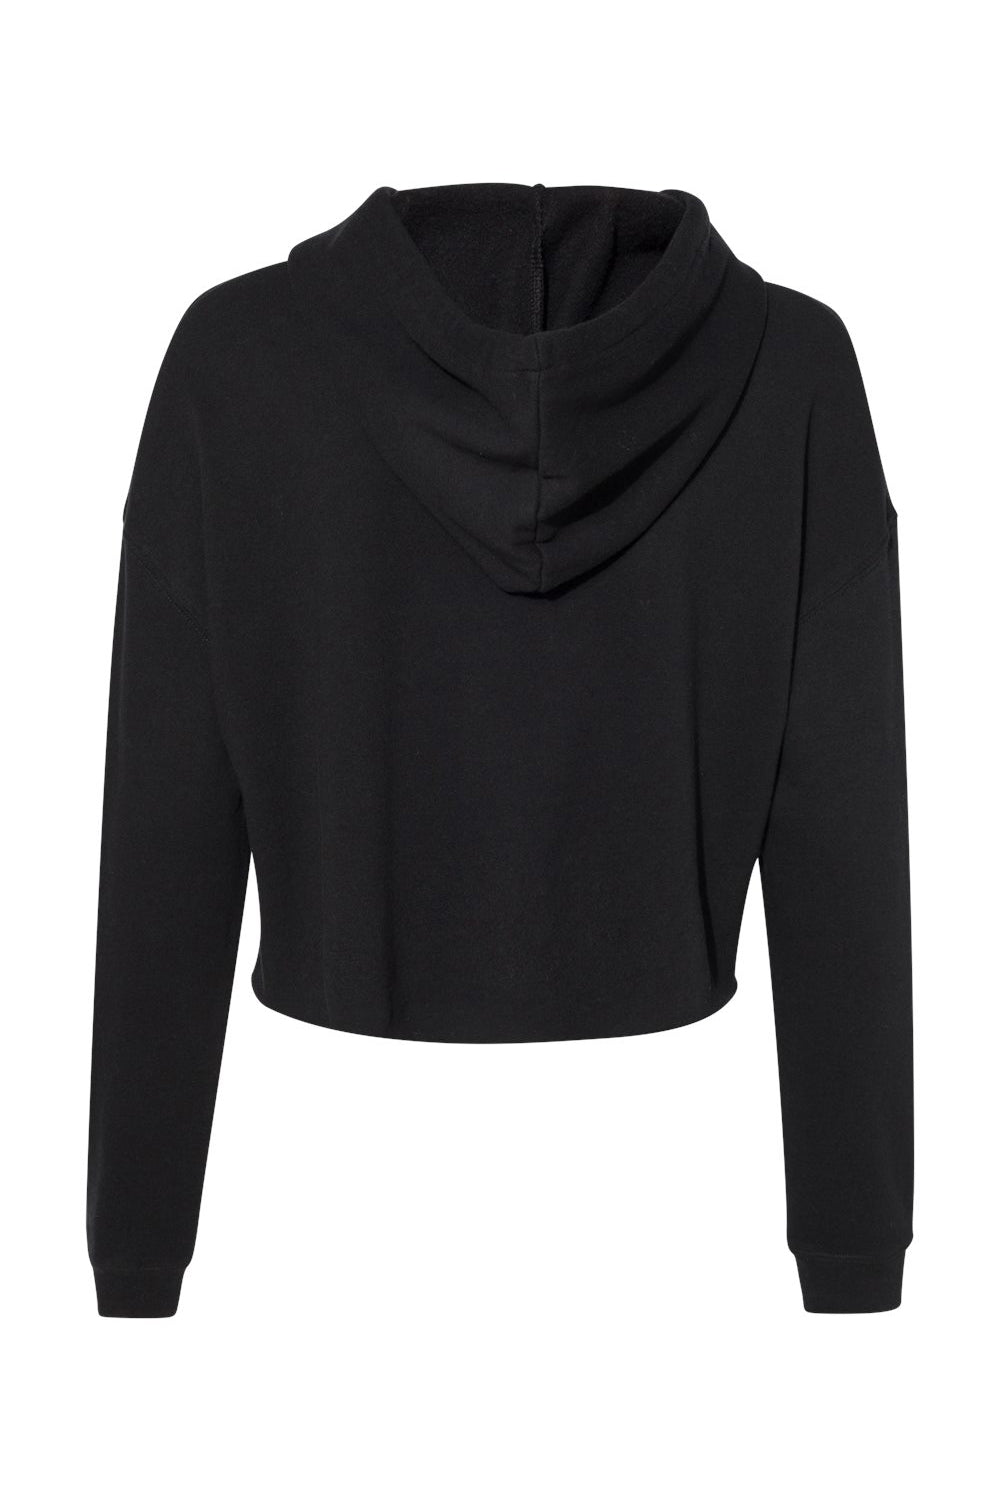 Independent Trading Co. AFX64CRP Womens Crop Hooded Sweatshirt Hoodie Black Flat Back